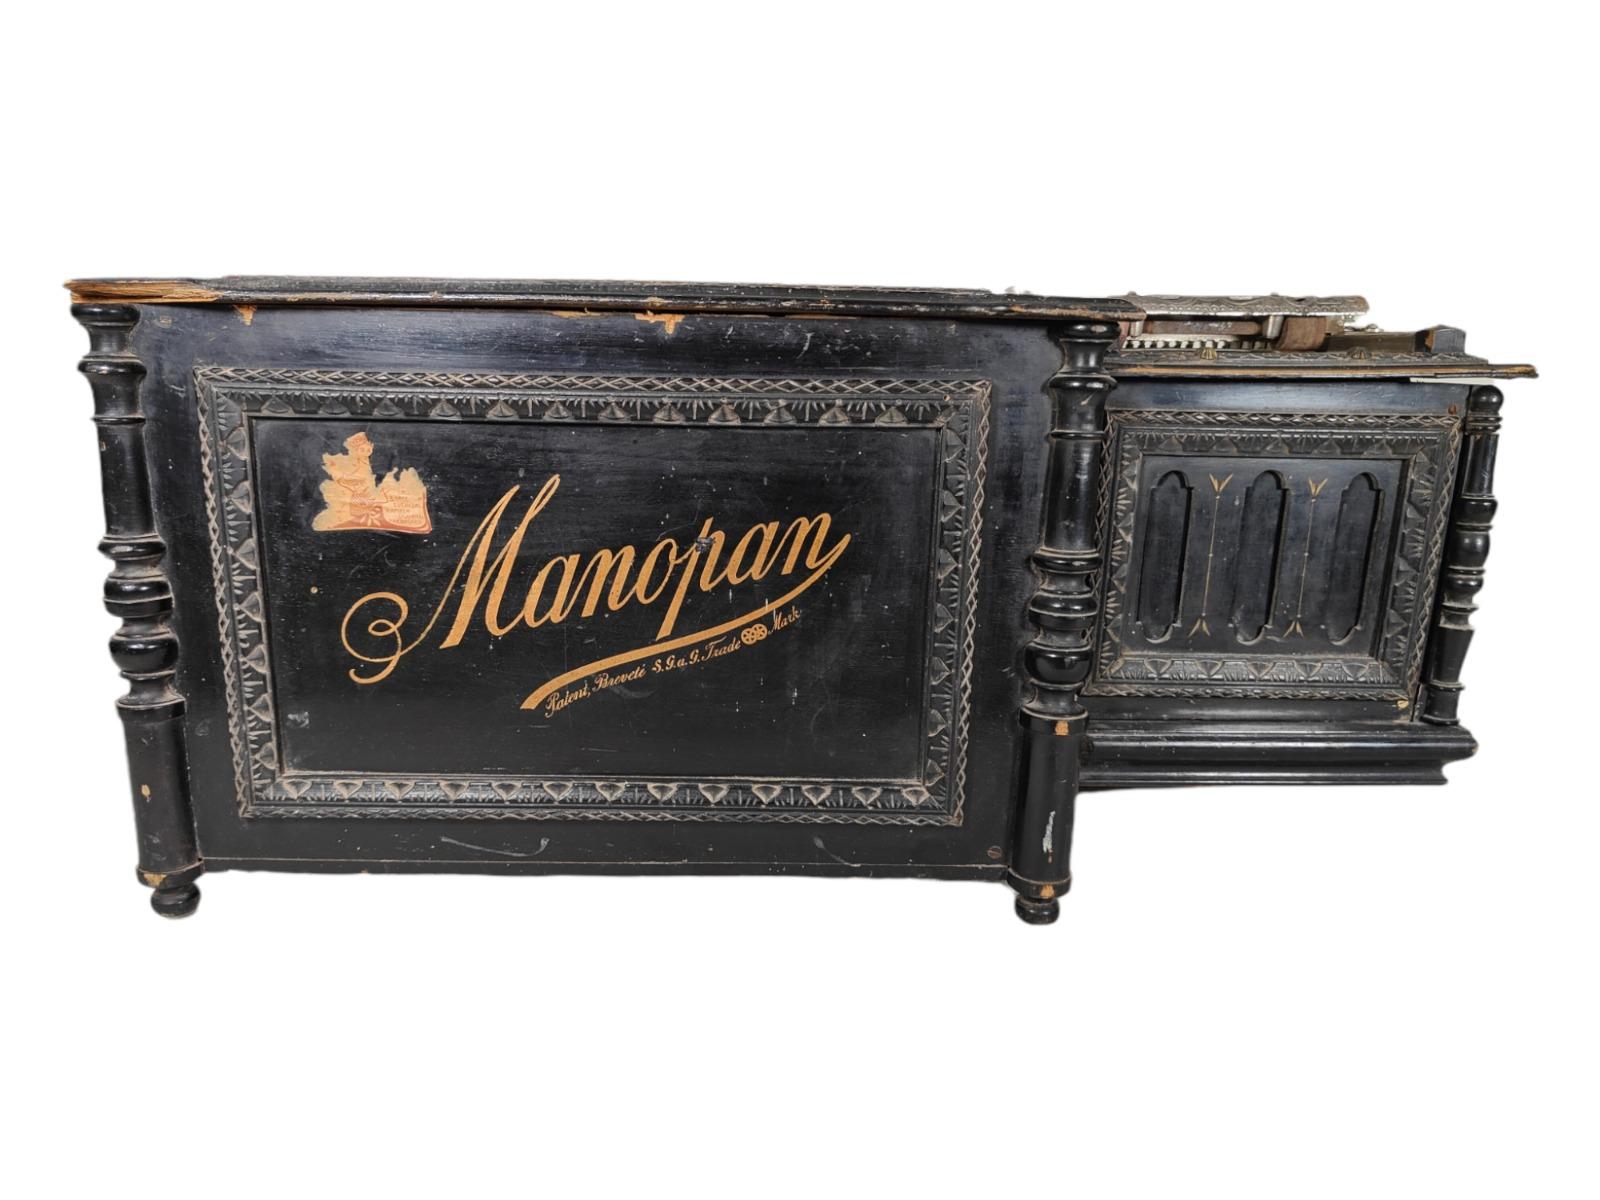 Spanish Manopan Crank Musical Organ 19th Century For Sale